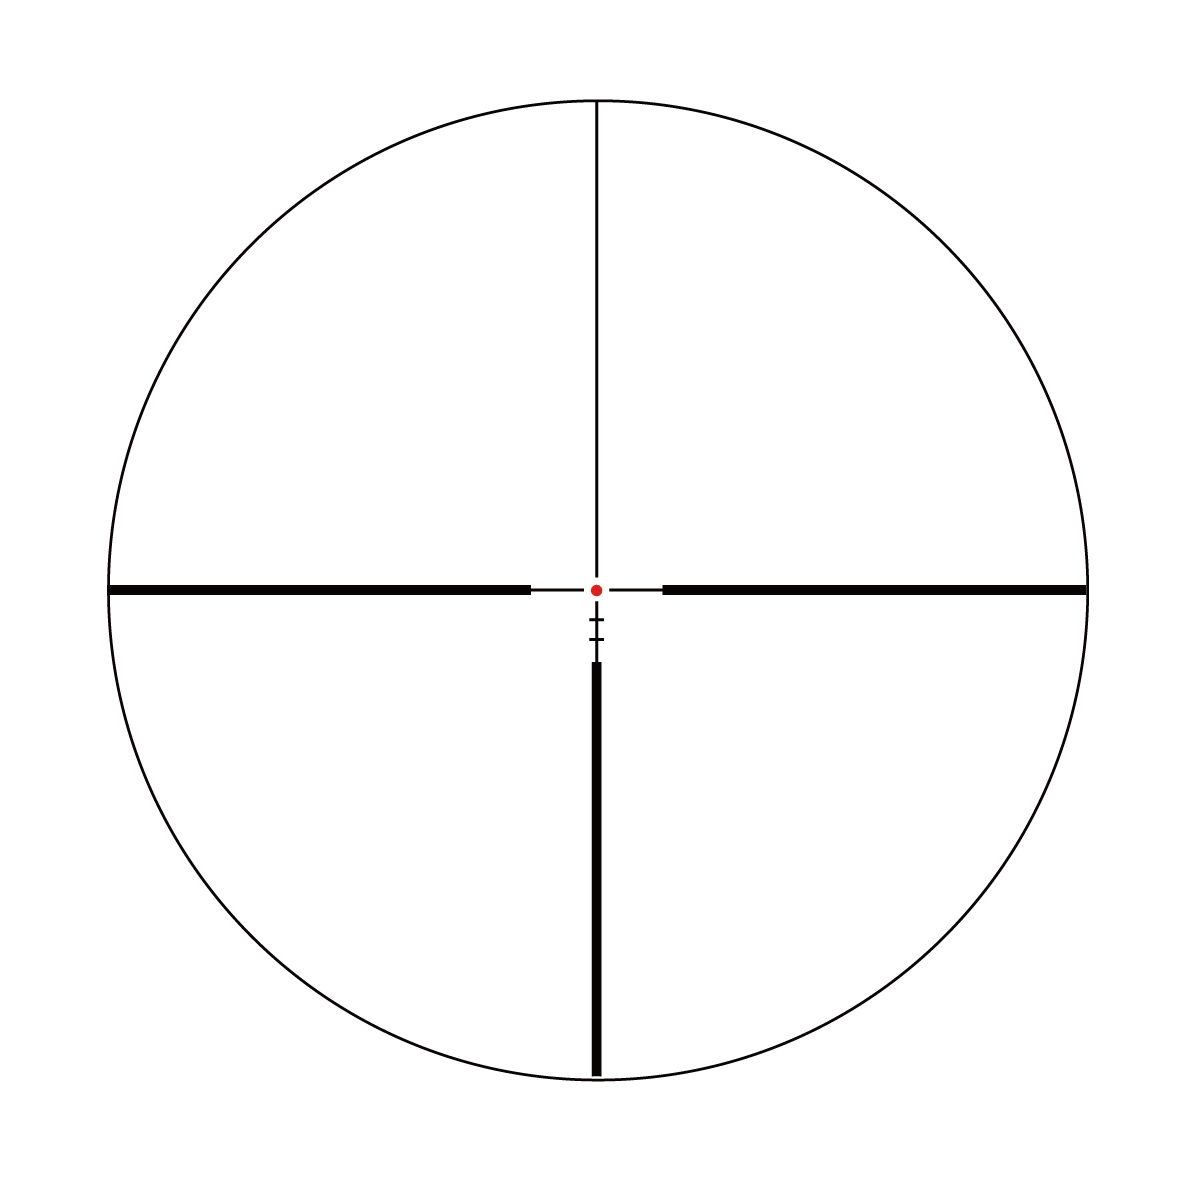 SCOM-45 8x riflescope reticle